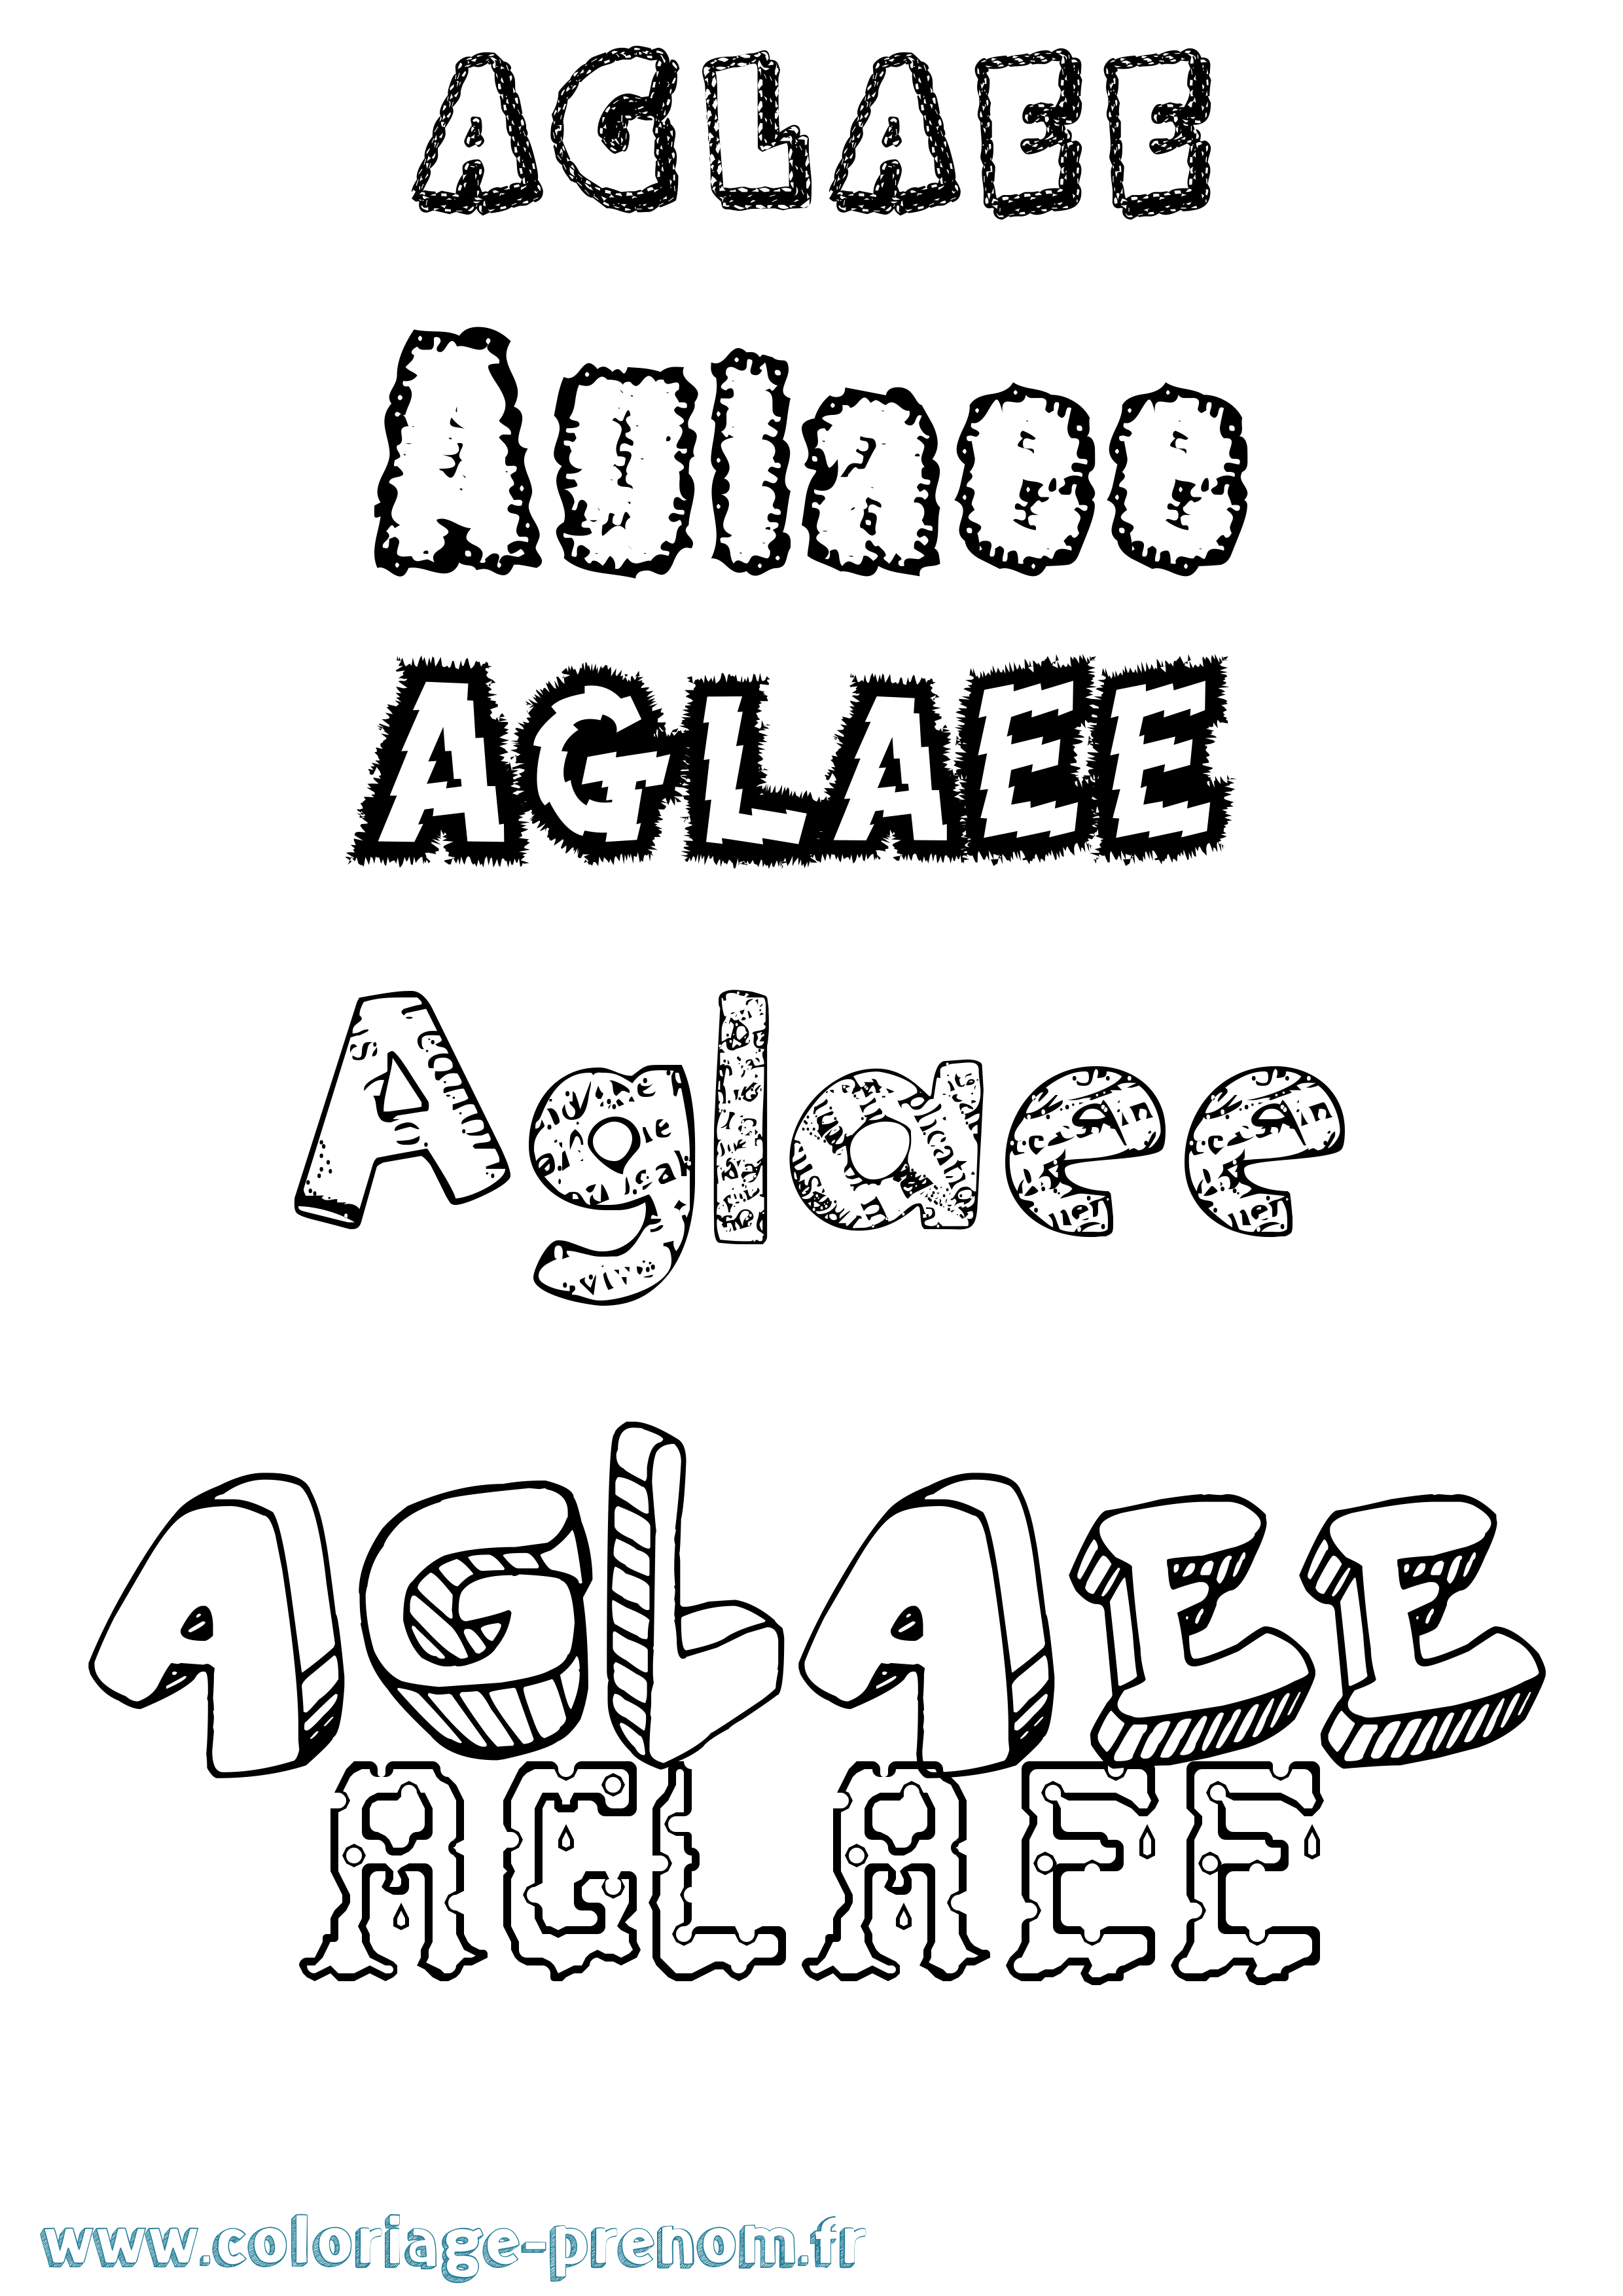 Coloriage prénom Aglaee Destructuré